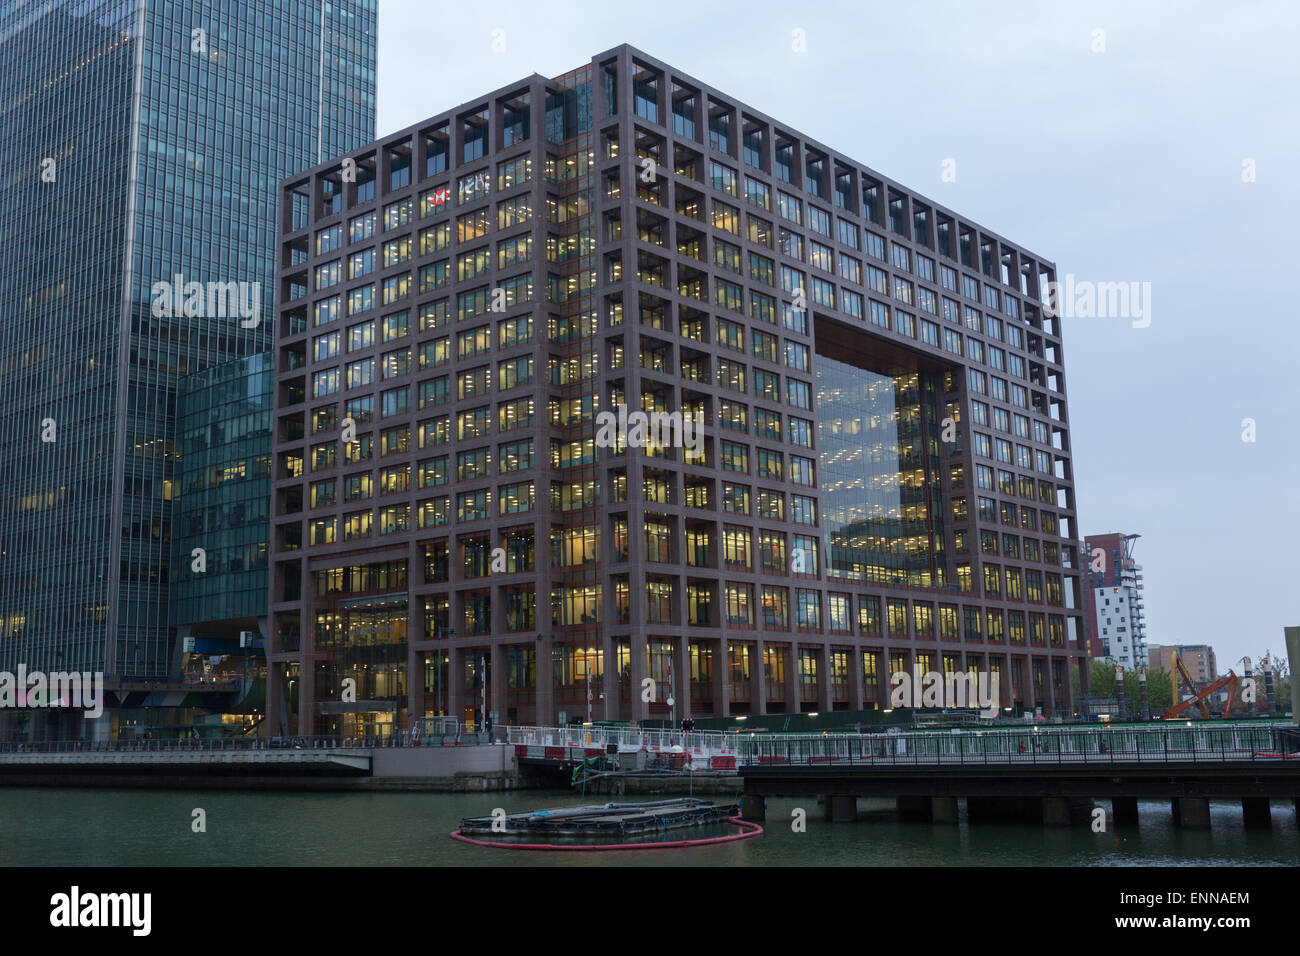 Morgan Stanley uffici presso Canary Wharf London Foto stock - Alamy